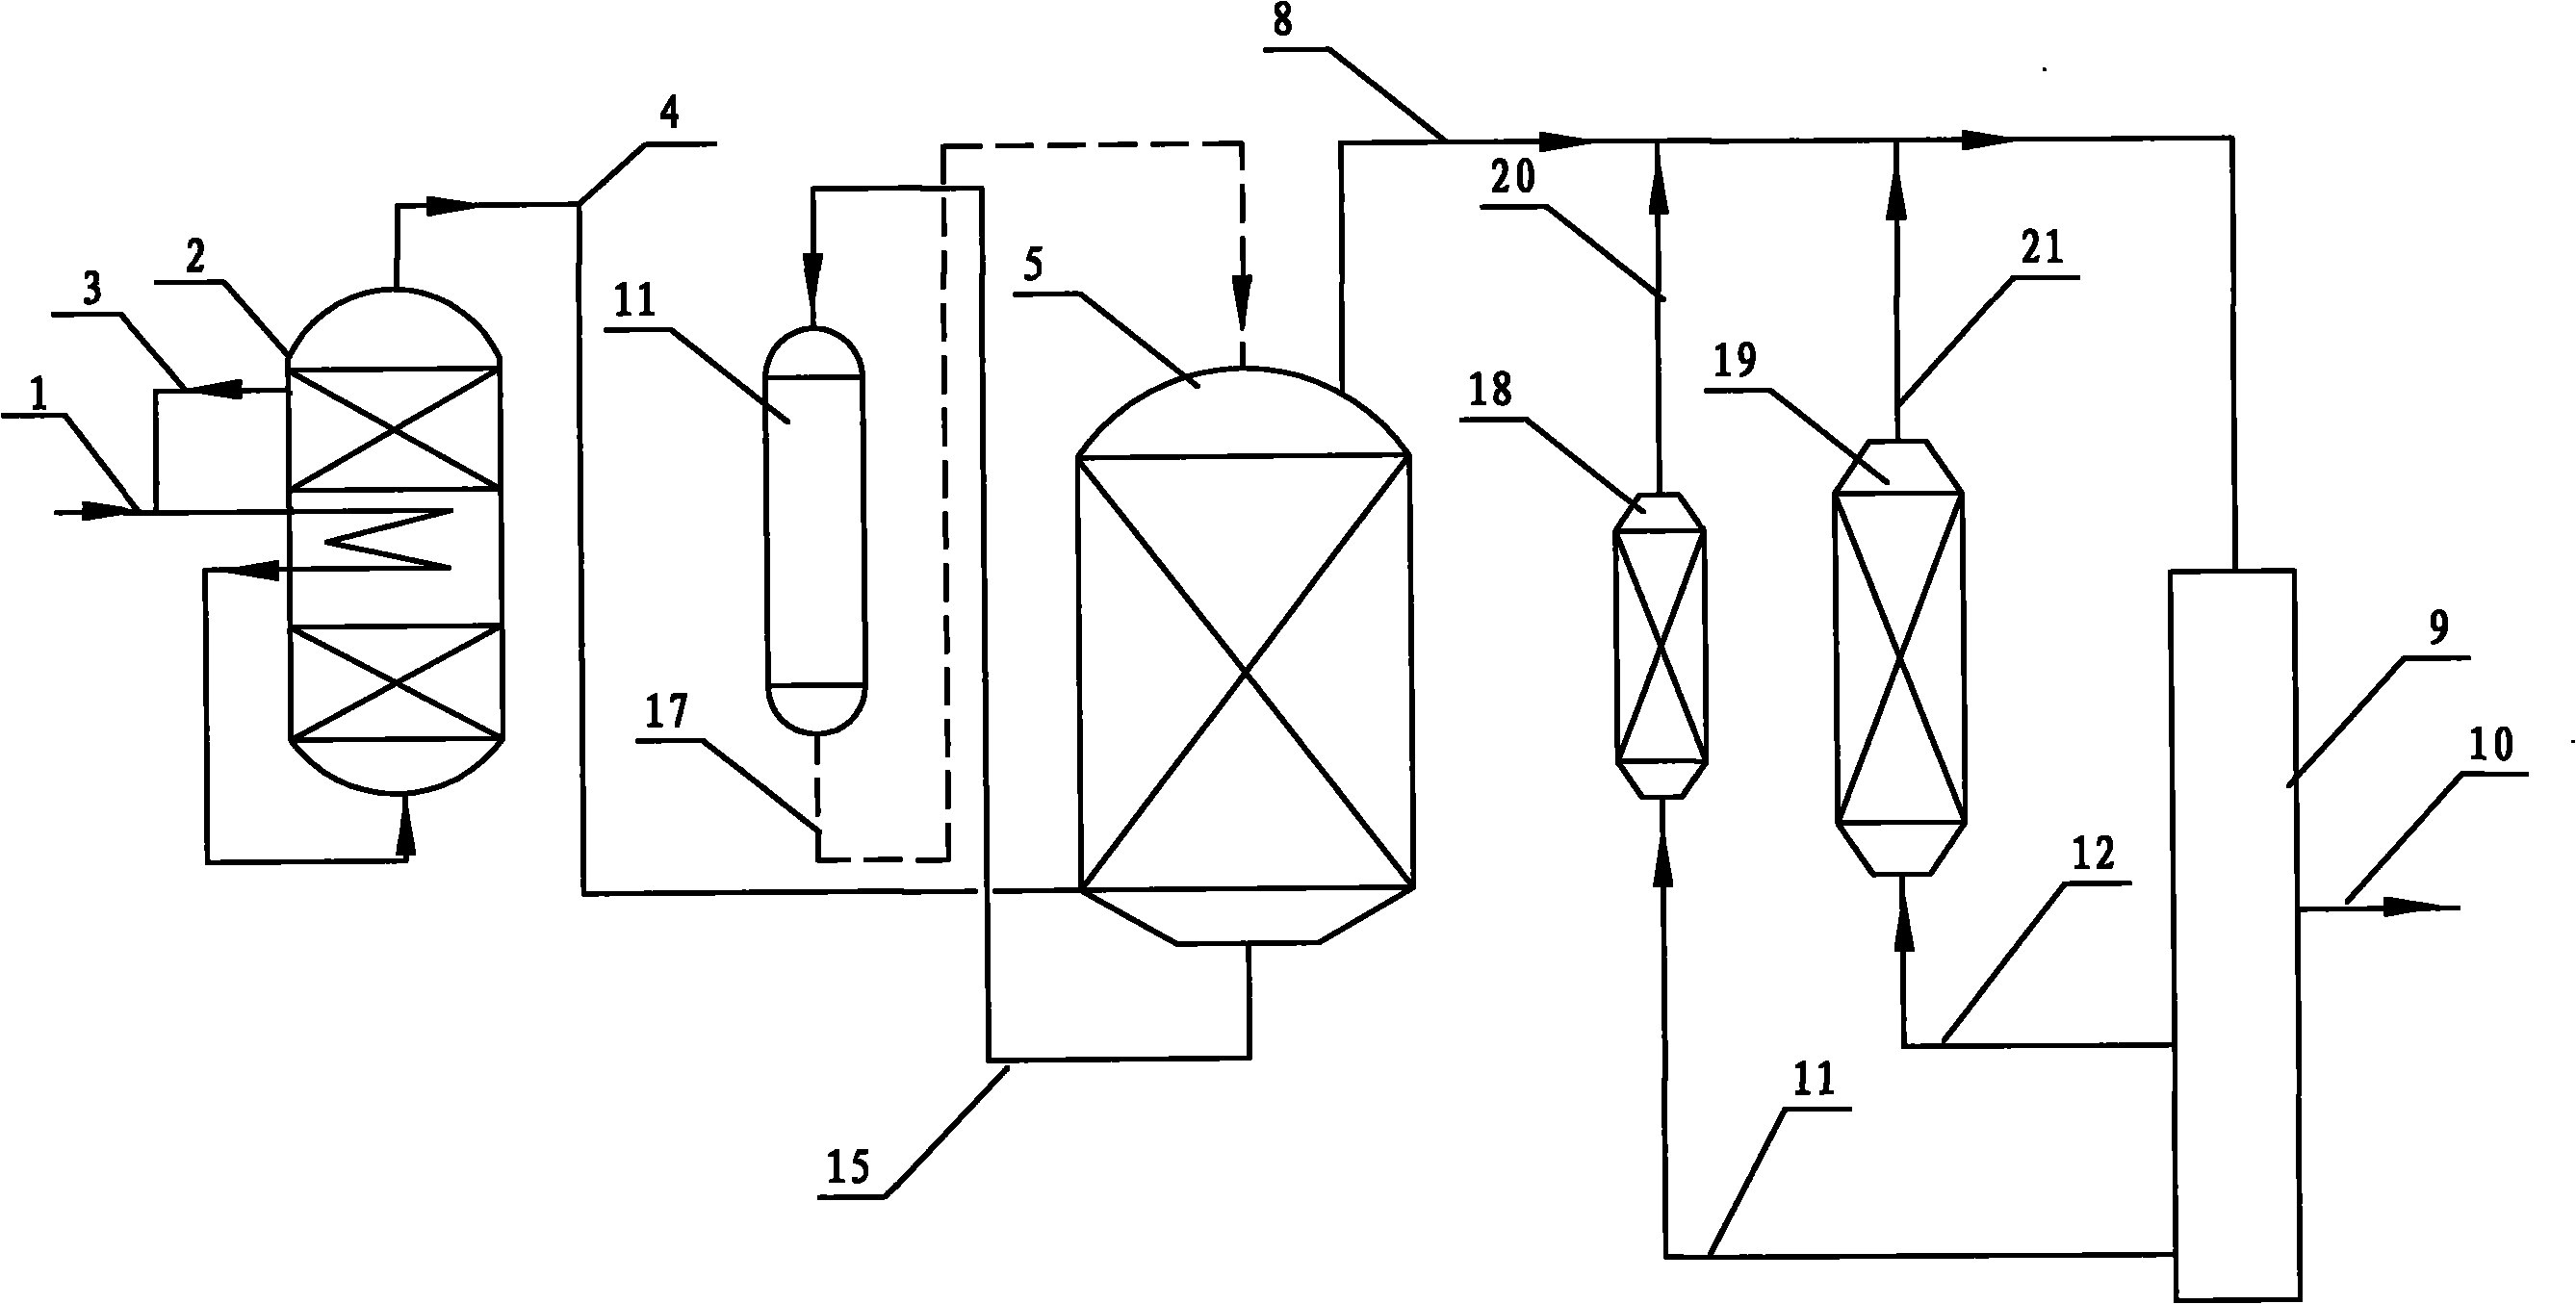 Method for preparing olefin by dehydration of methanol